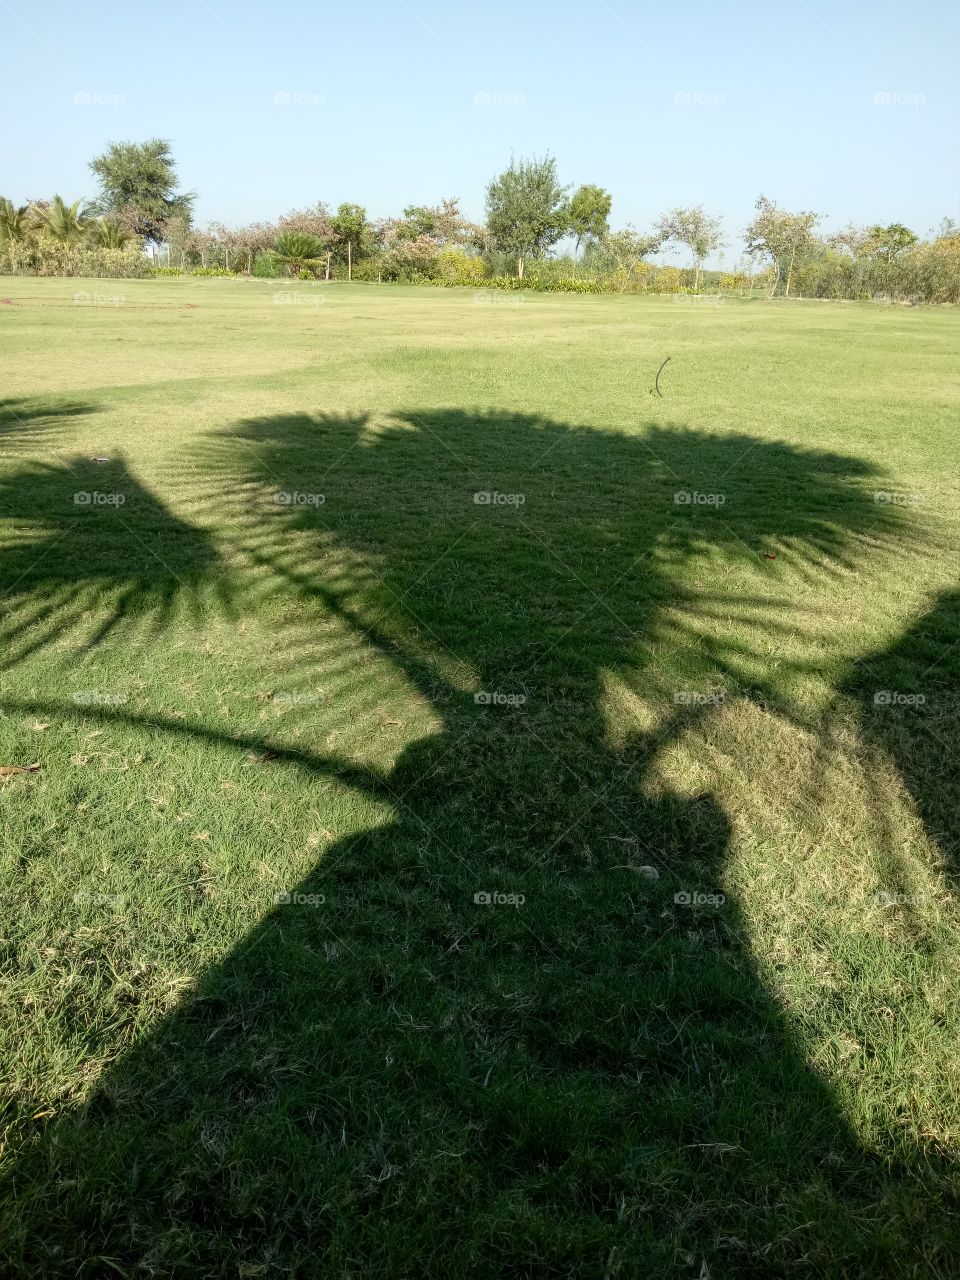 Tree shadow on grass